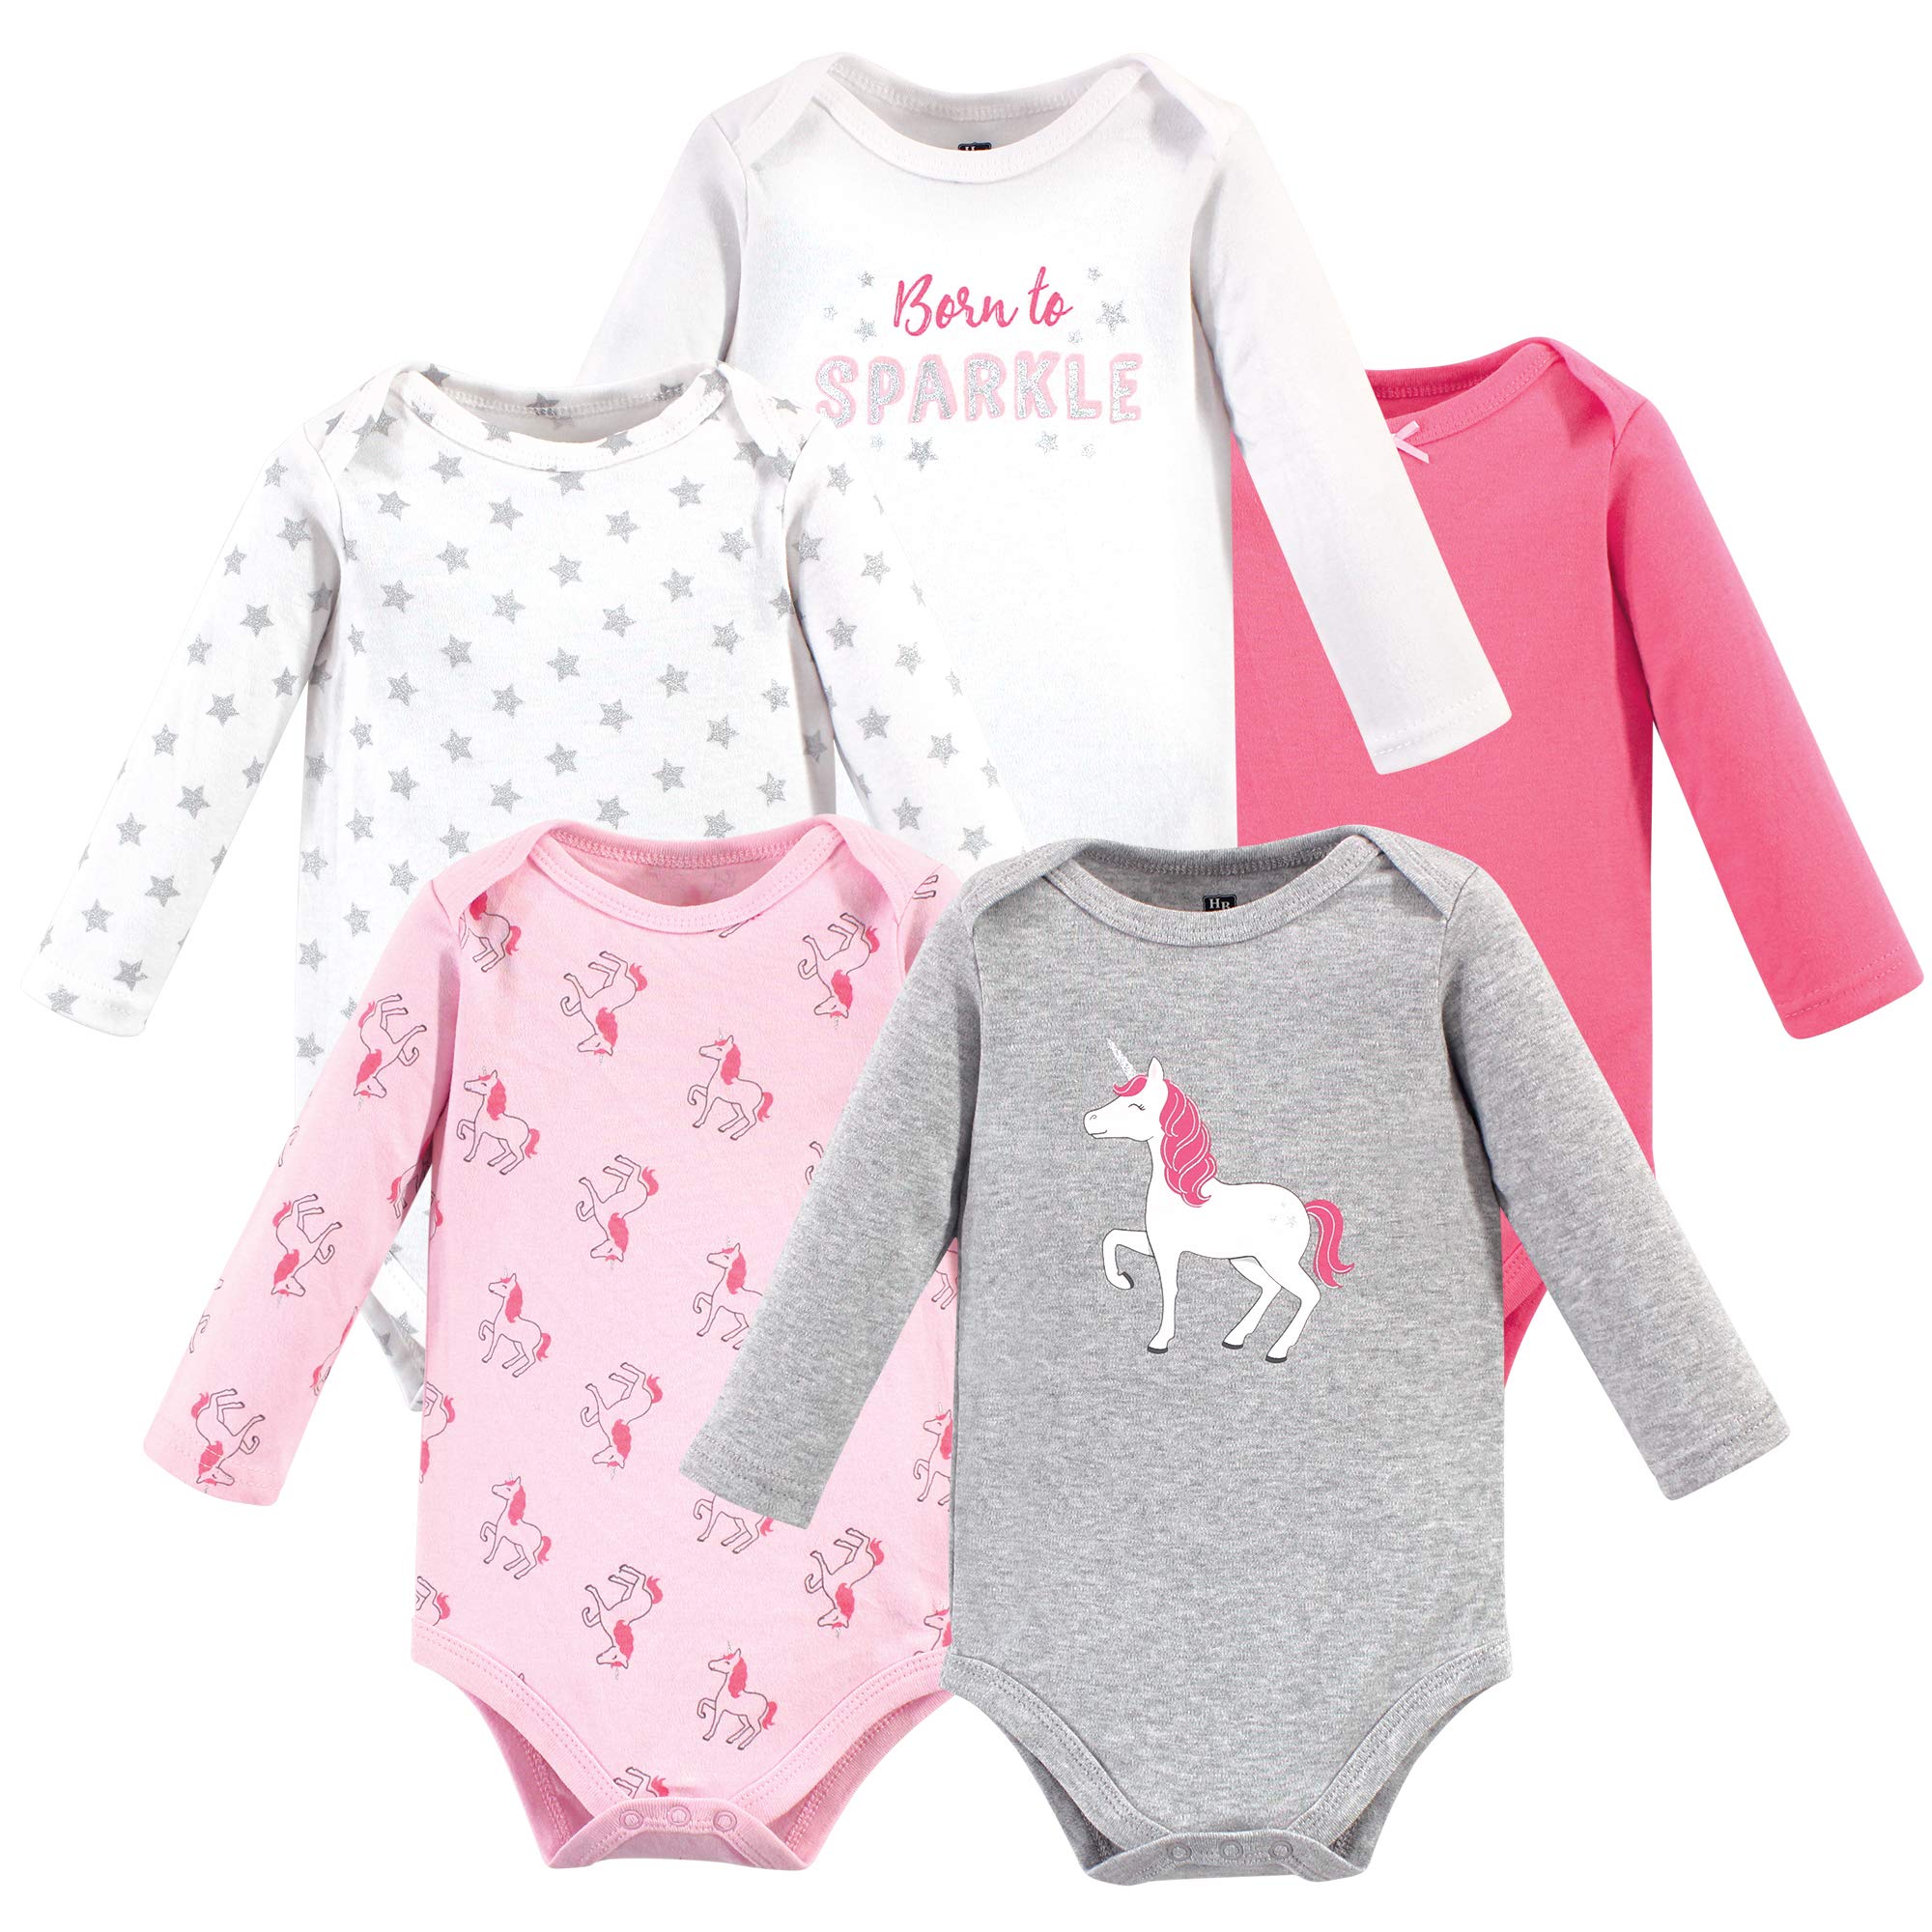 Hudson Baby Unisex Baby Cotton Long-Sleeve Bodysuits Pink Unicorn, 3-6 Months